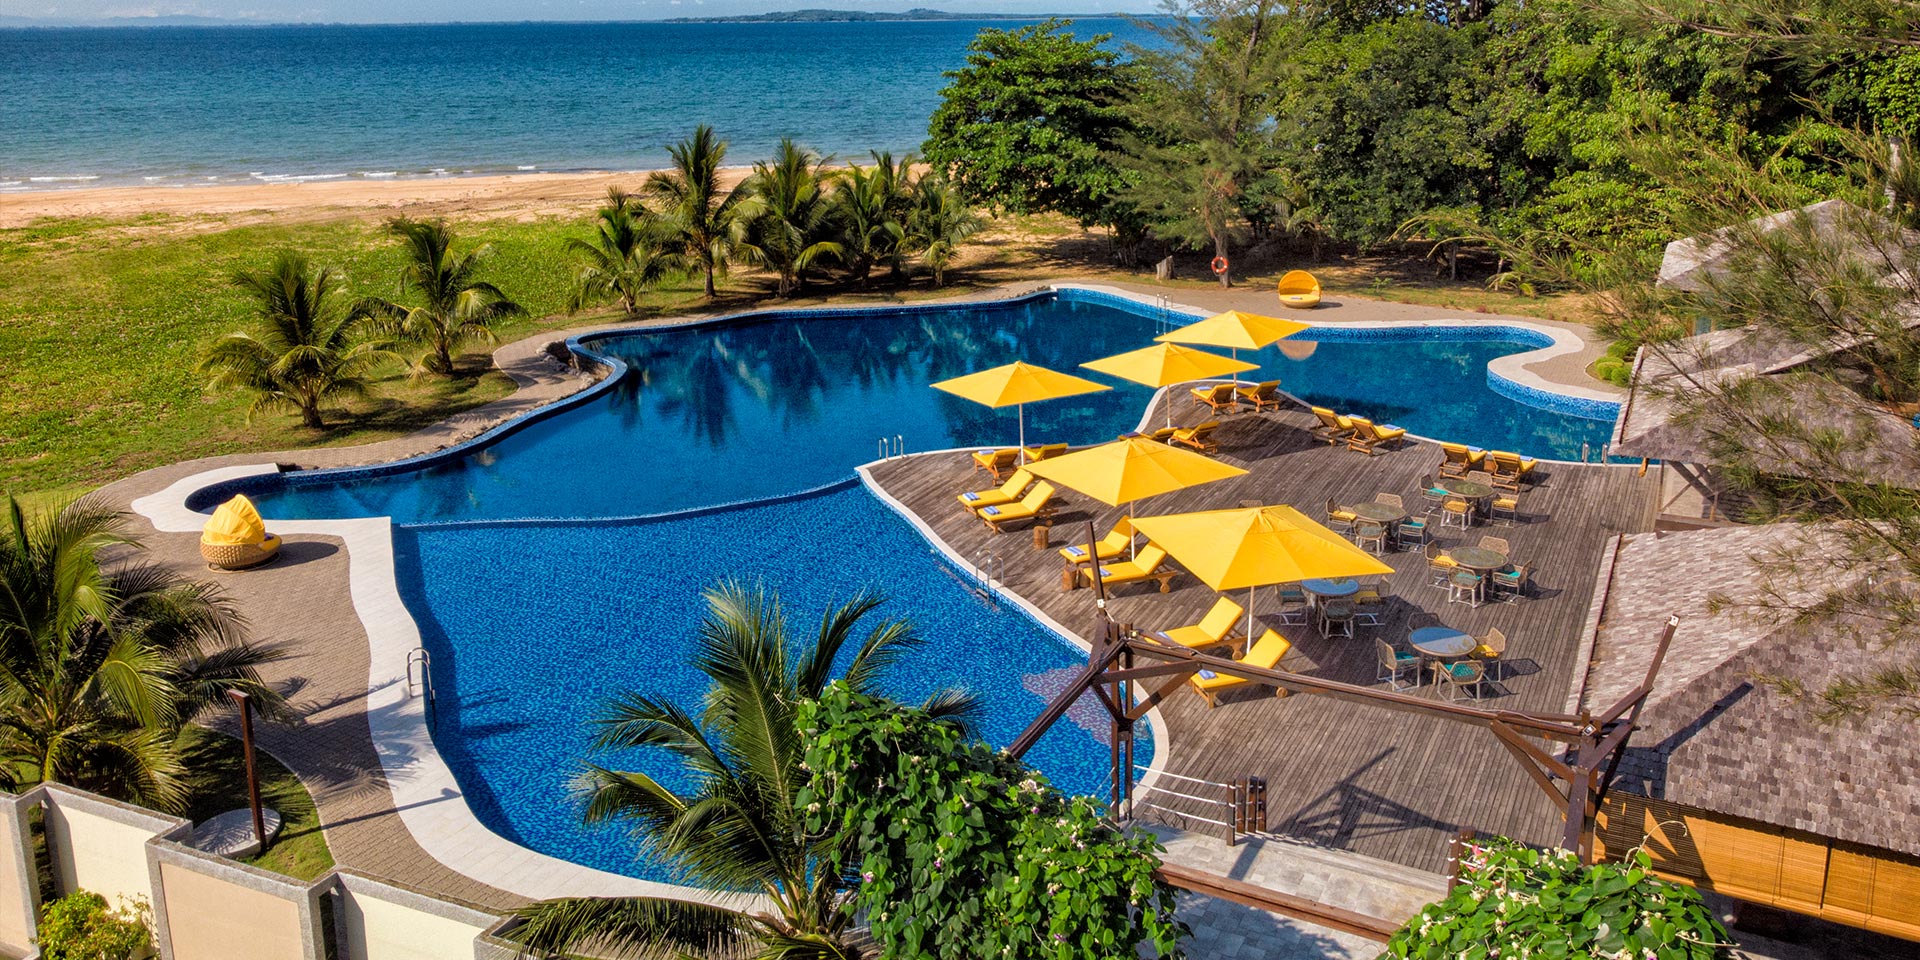 Borneo Eagle Resort Infinity Pool